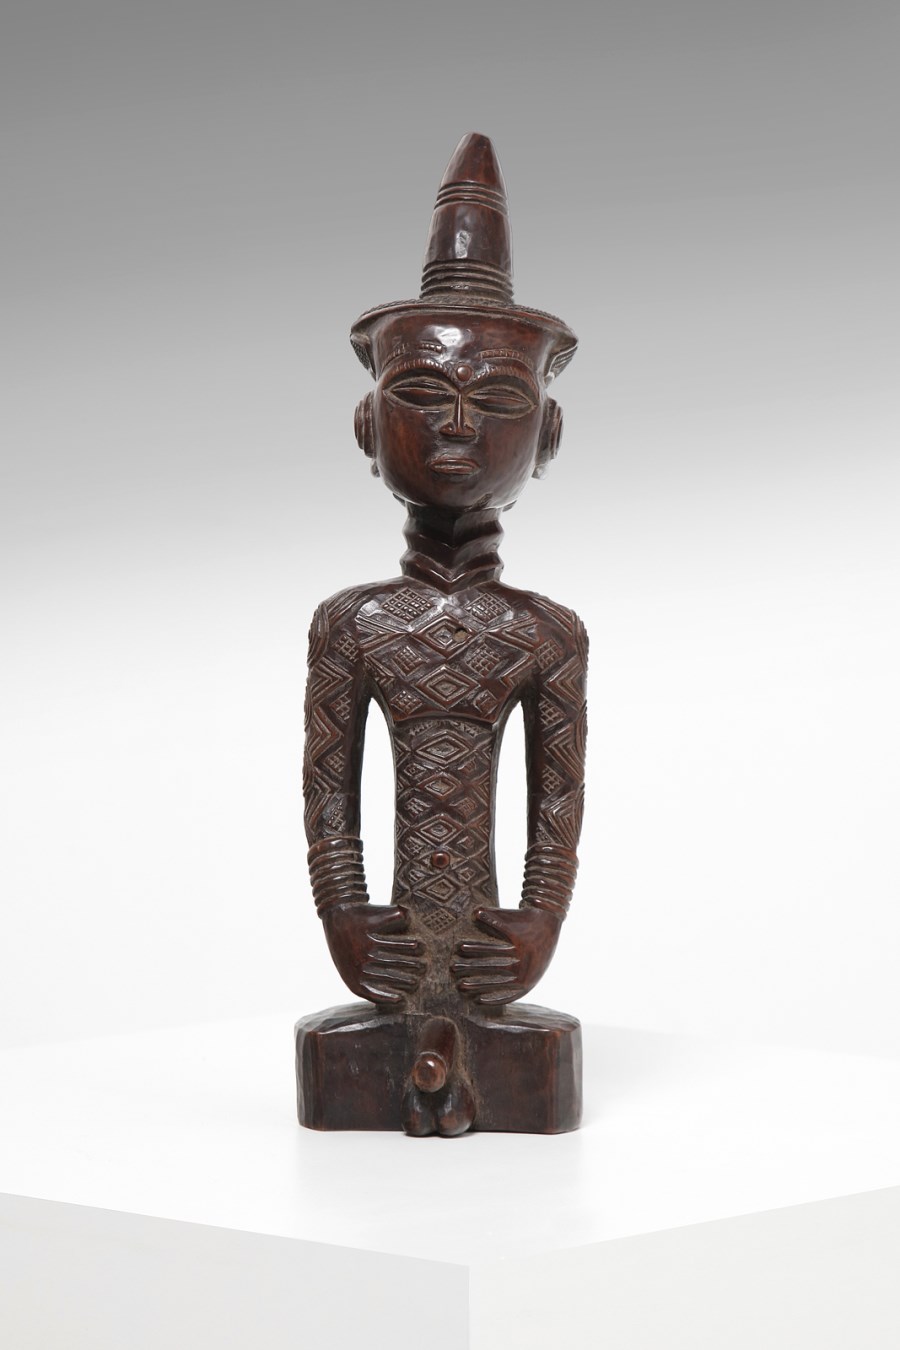 Figura maschile, Ndengese
Rep. Dem. Congo (Arte Africana )